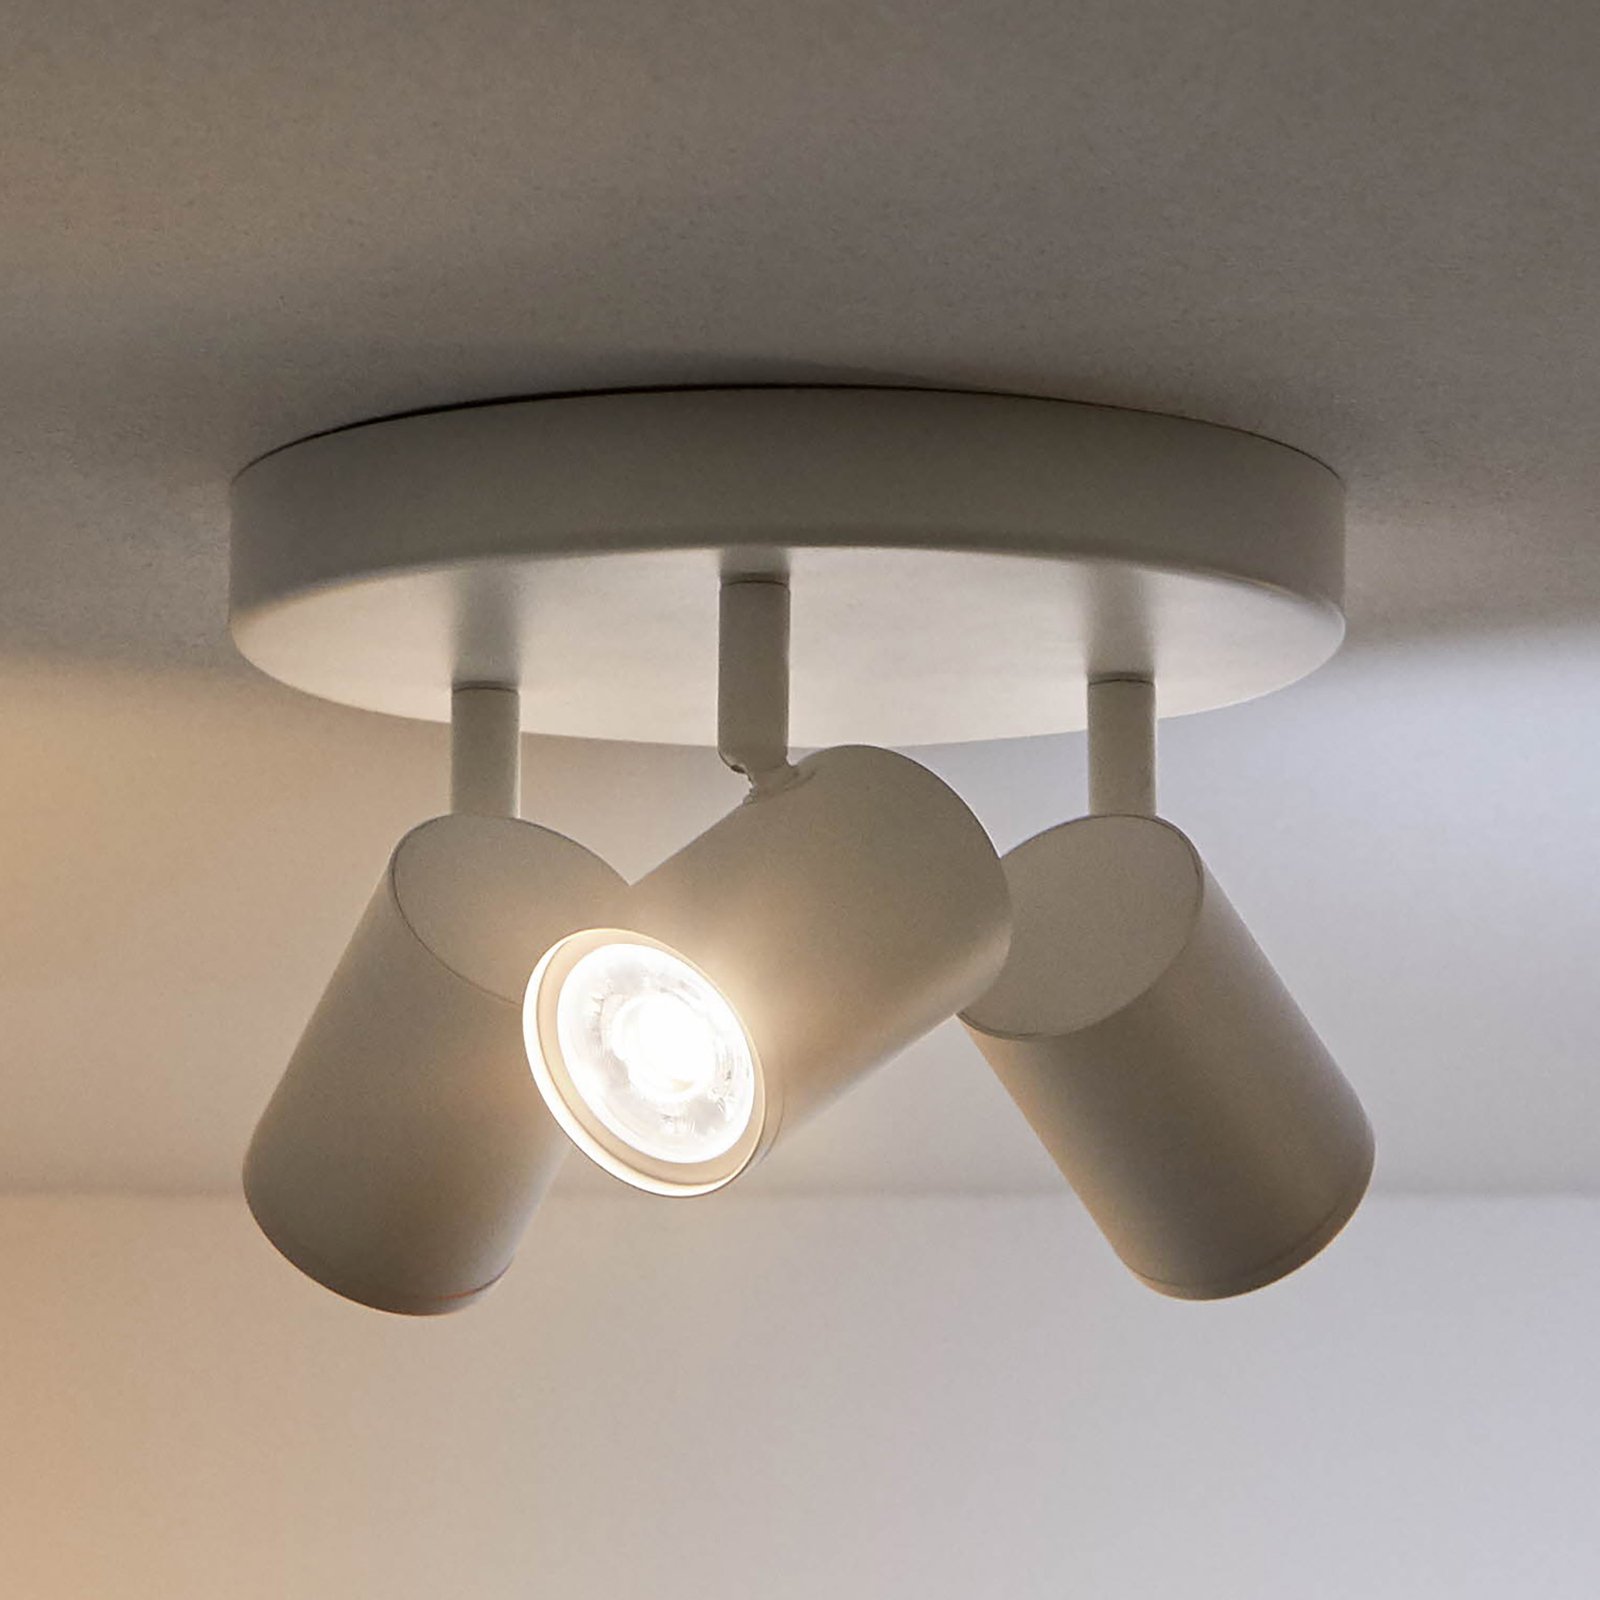 WiZ Imageo LED downlight, 3-bulb round, white